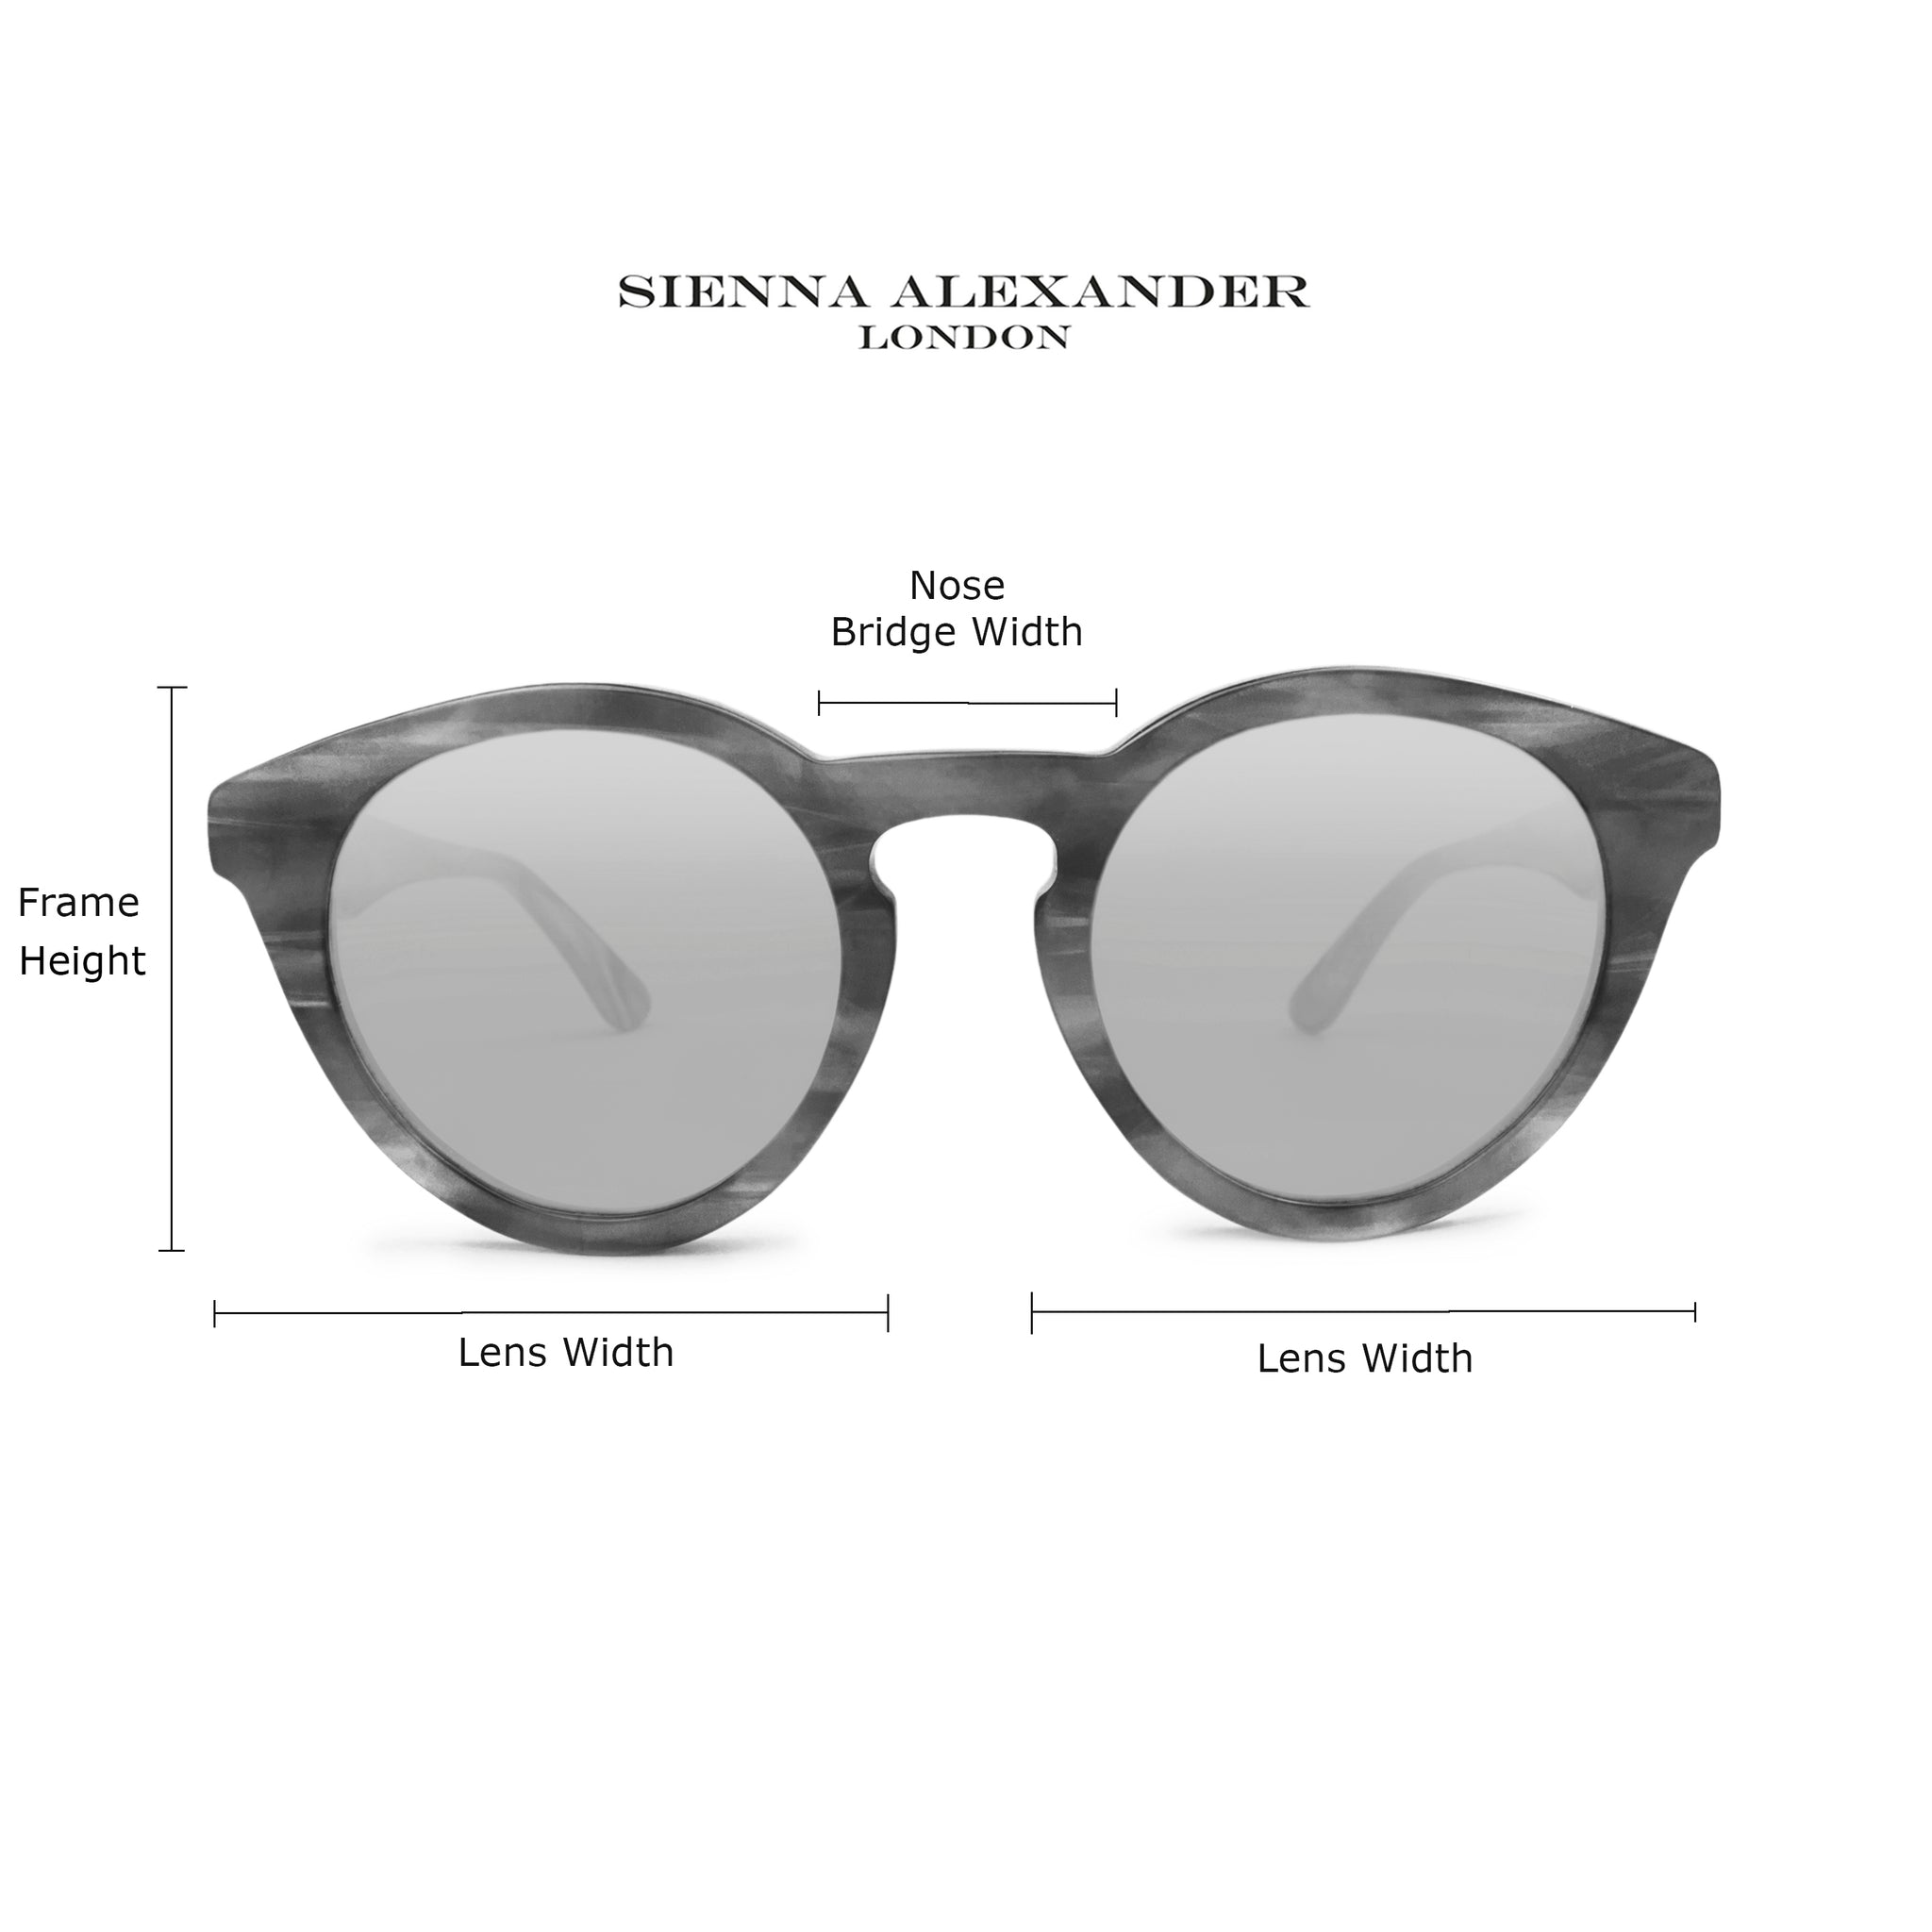 Sienna Alexander London - Size Guide